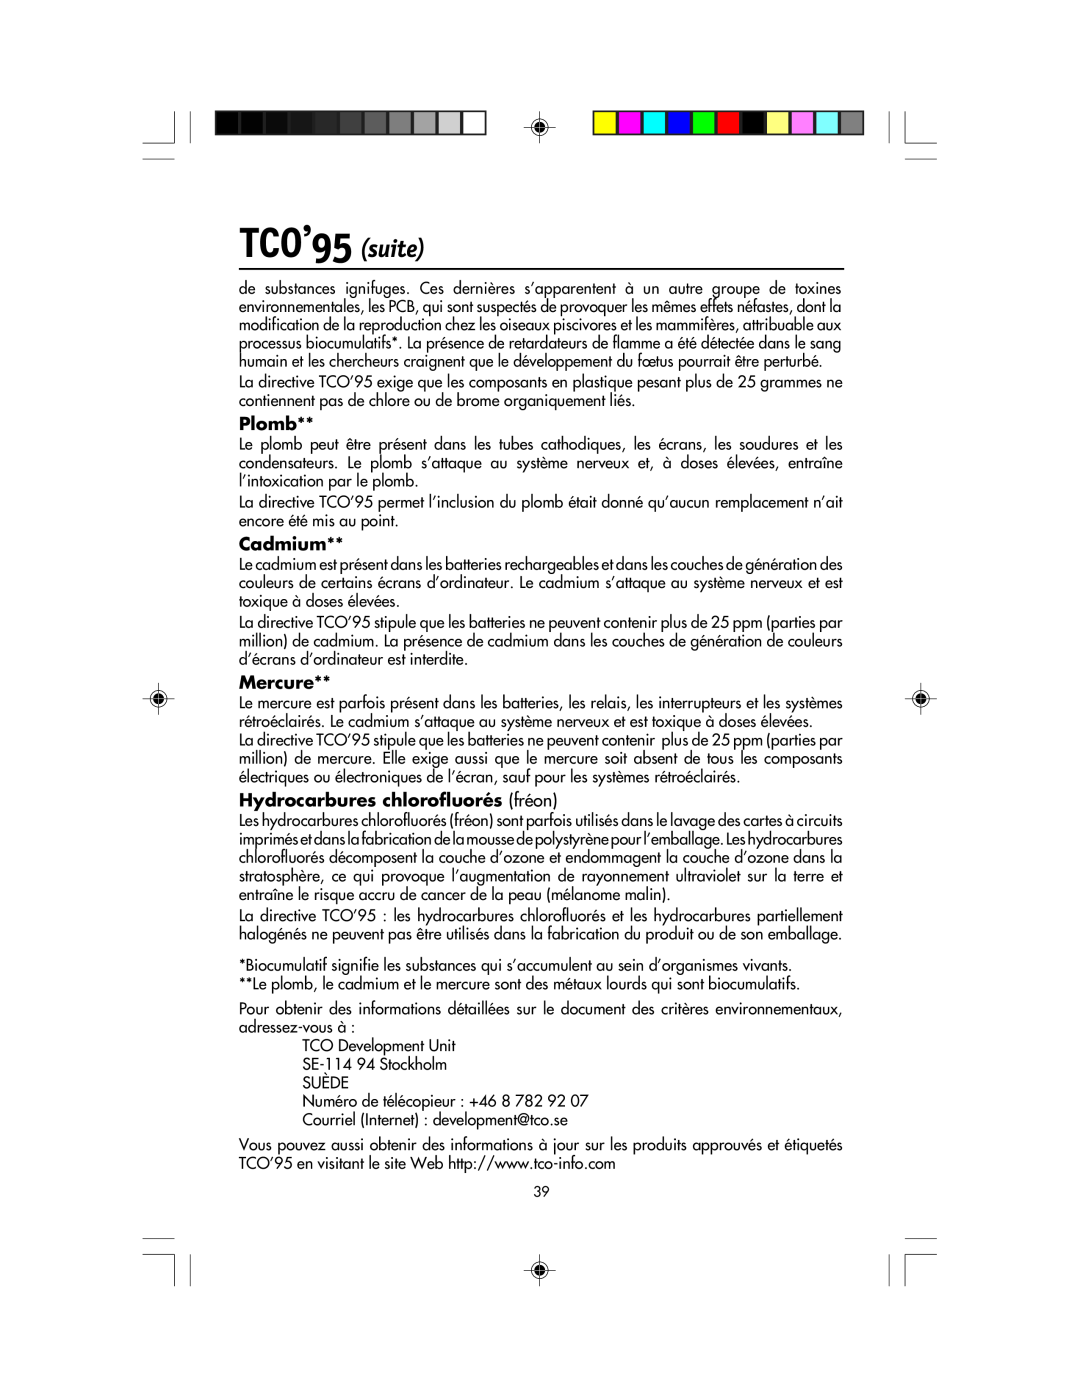 NEC LCD1920NX manual TCO’95 suite, Plomb, Cadmium, Mercure, Hydrocarbures chlorofluorés fréon 